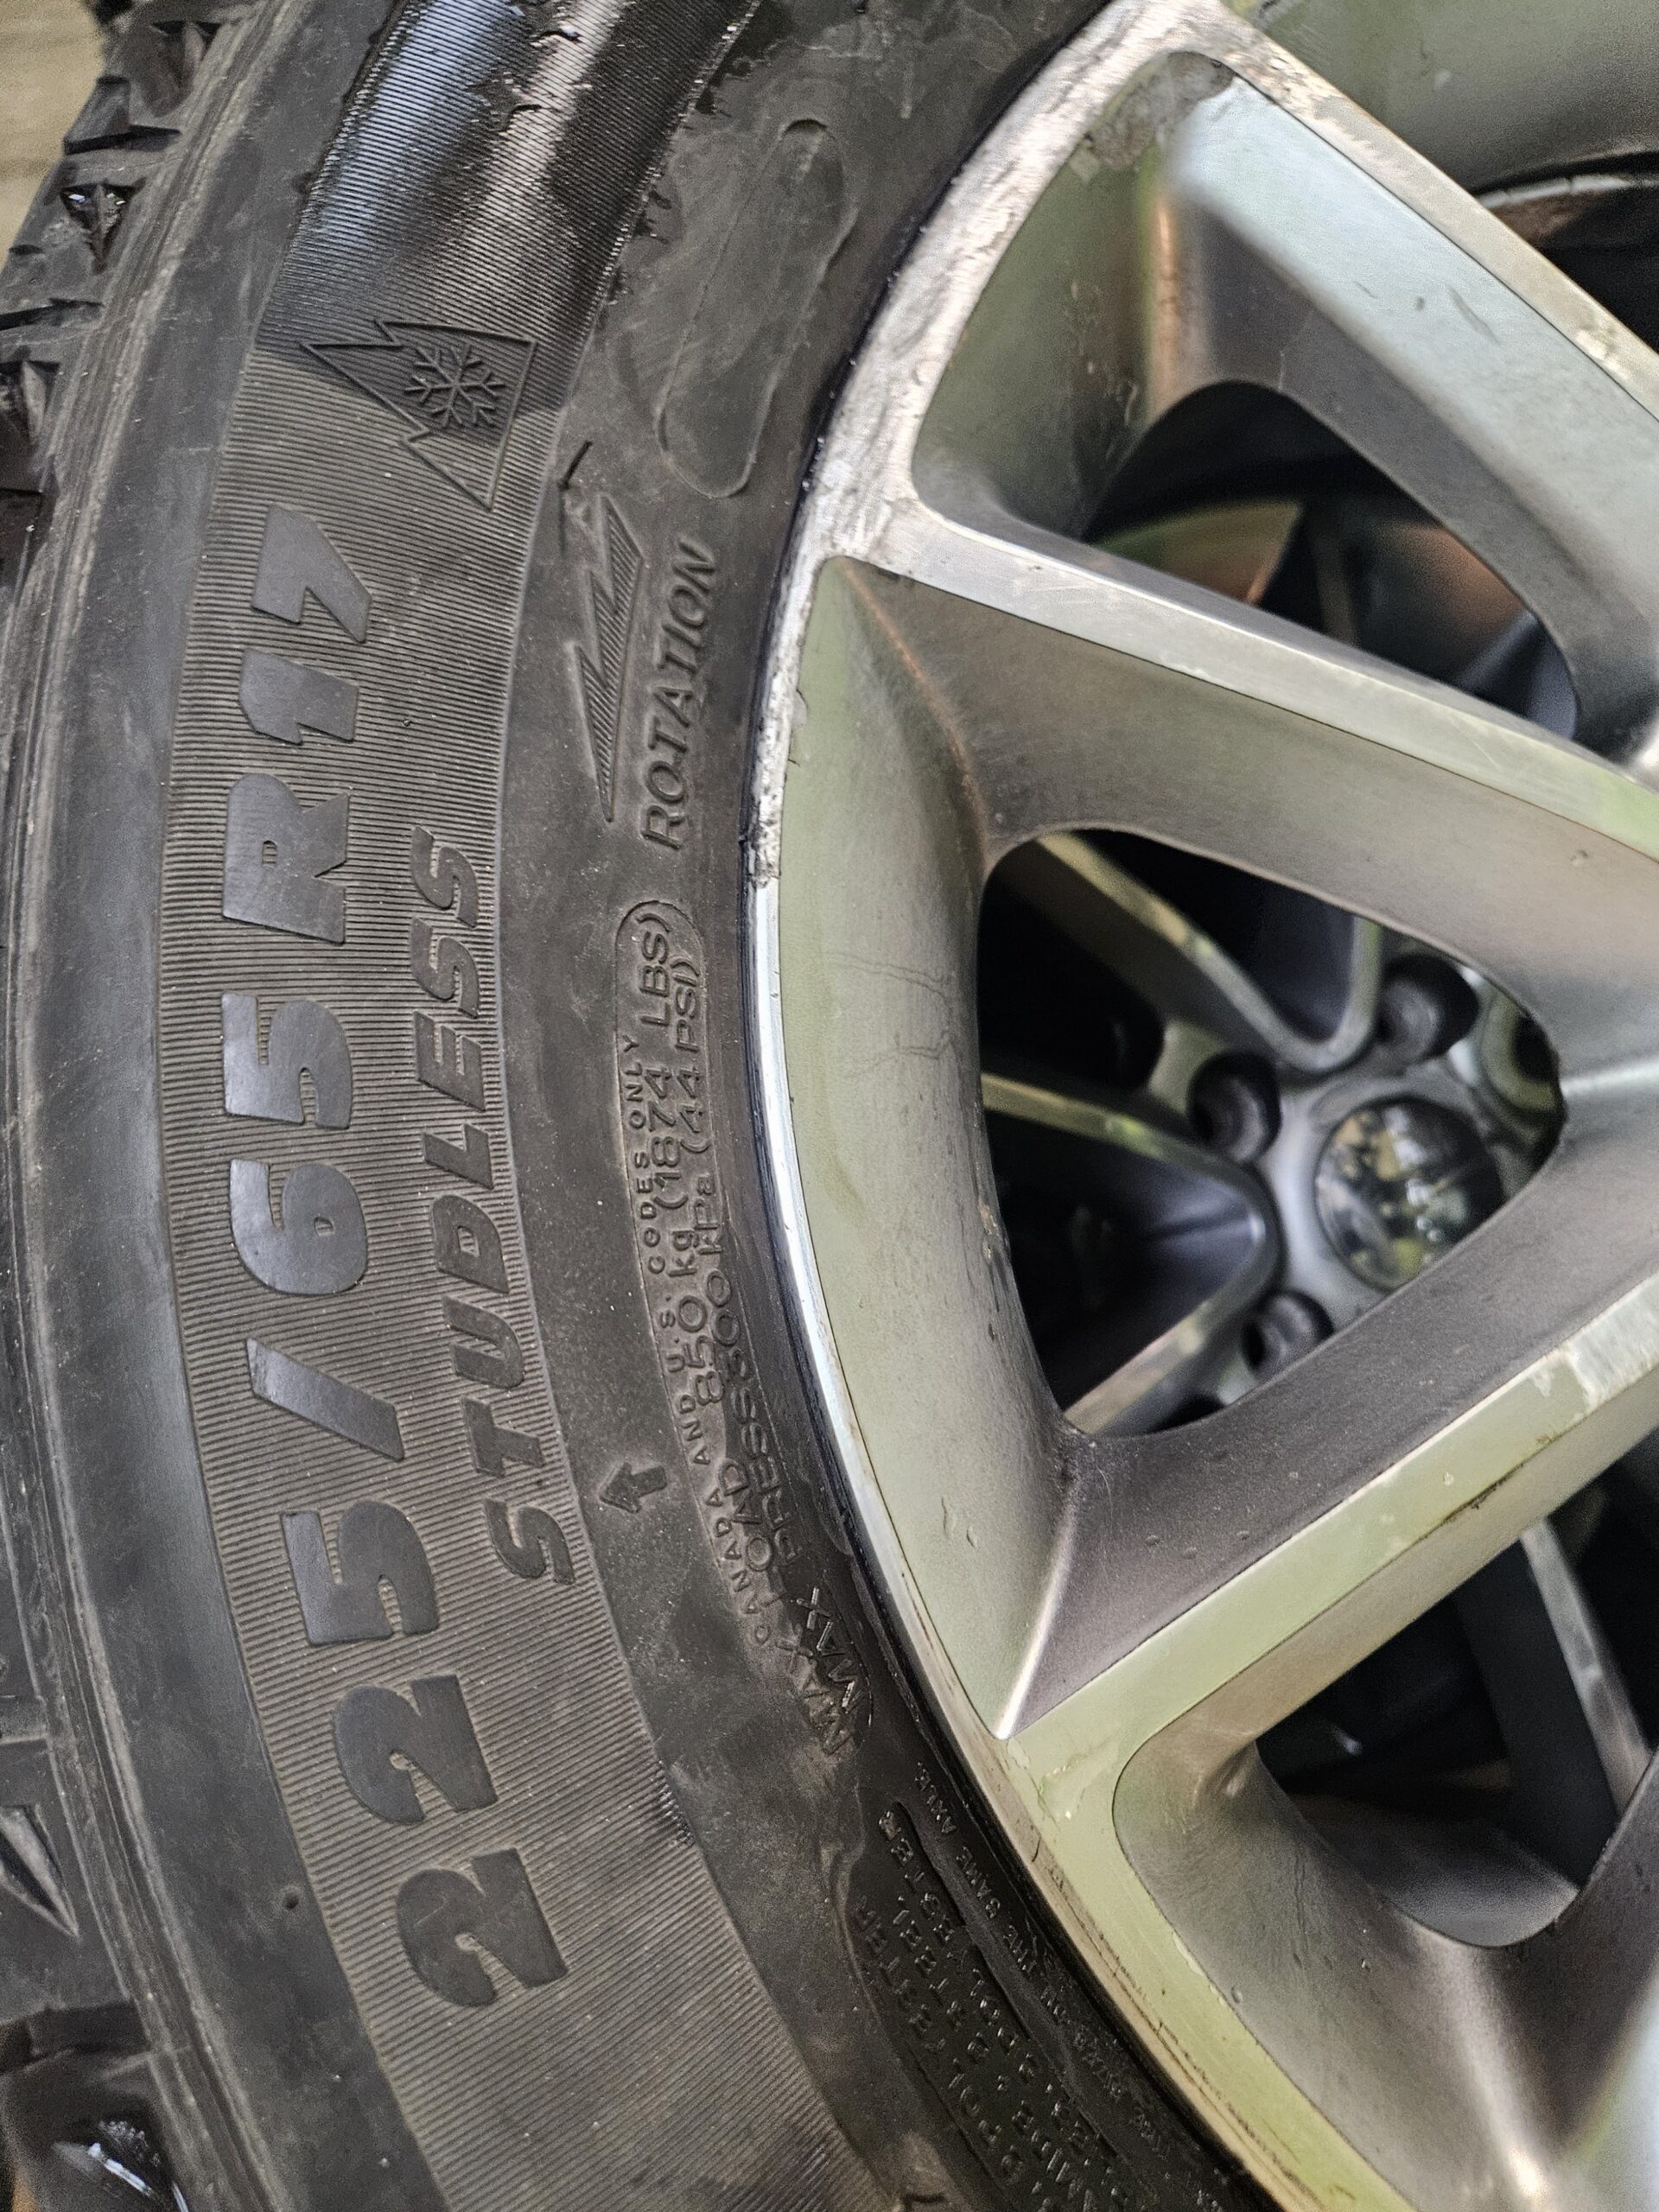 225/65R17 Michelin Snow Tires